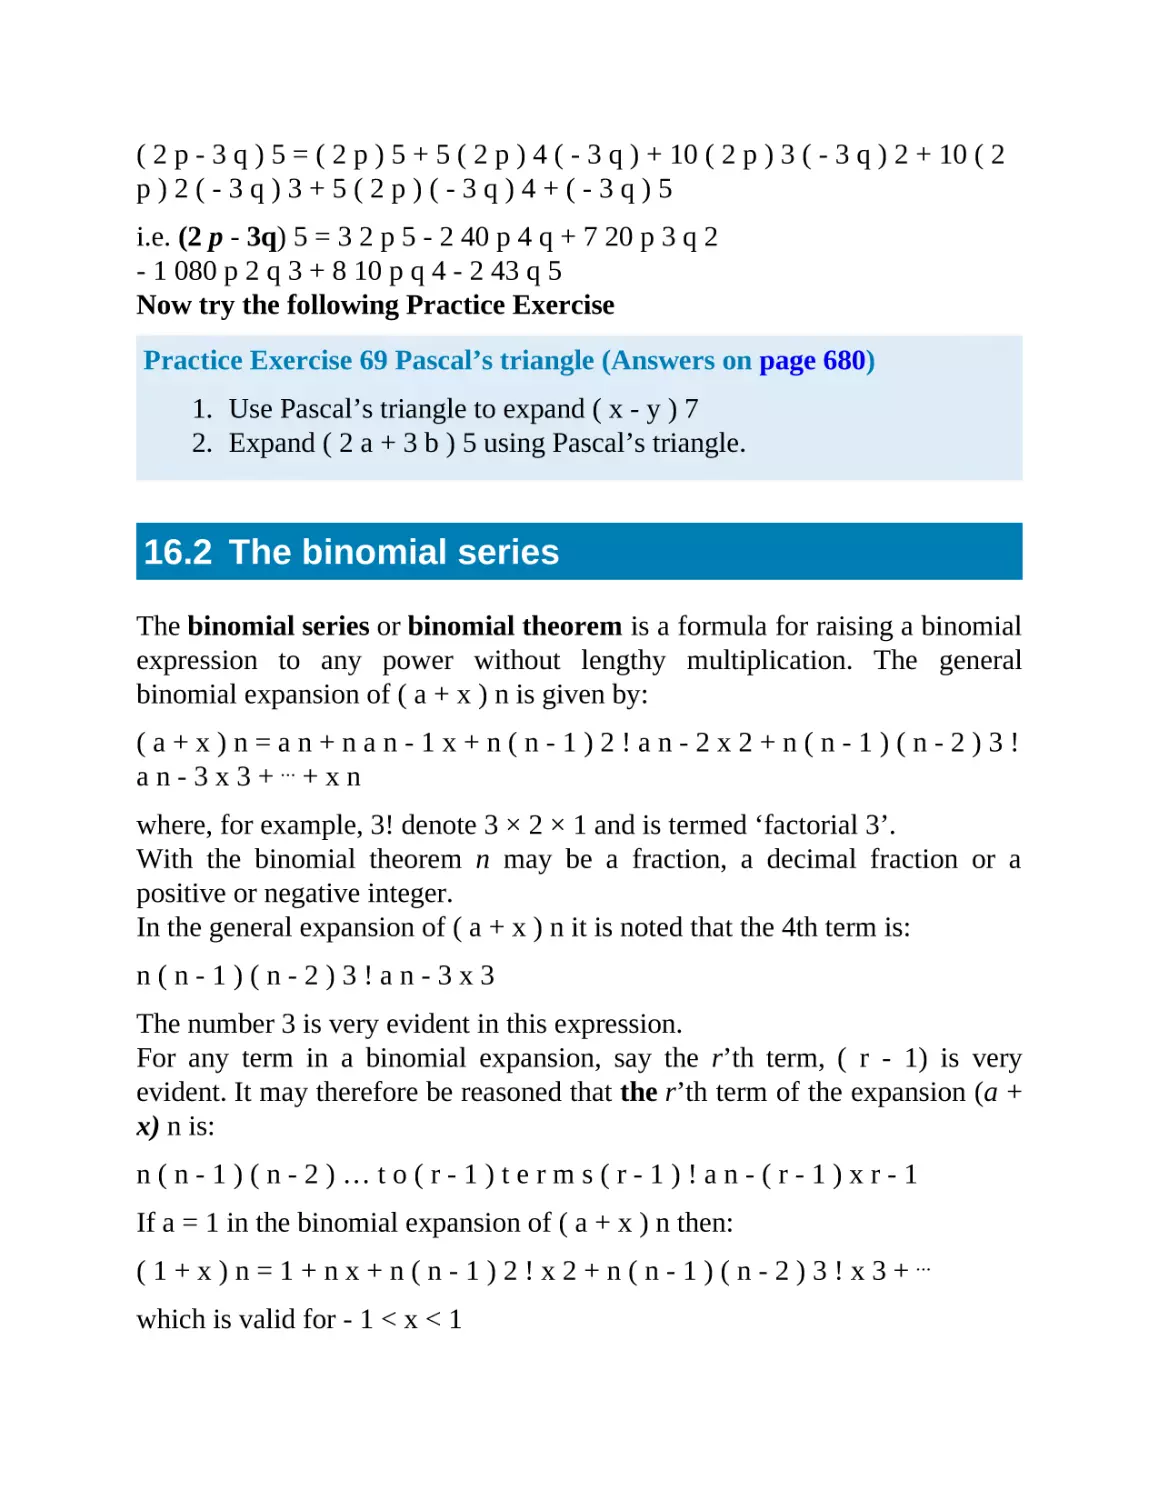 16.2 The binomial series